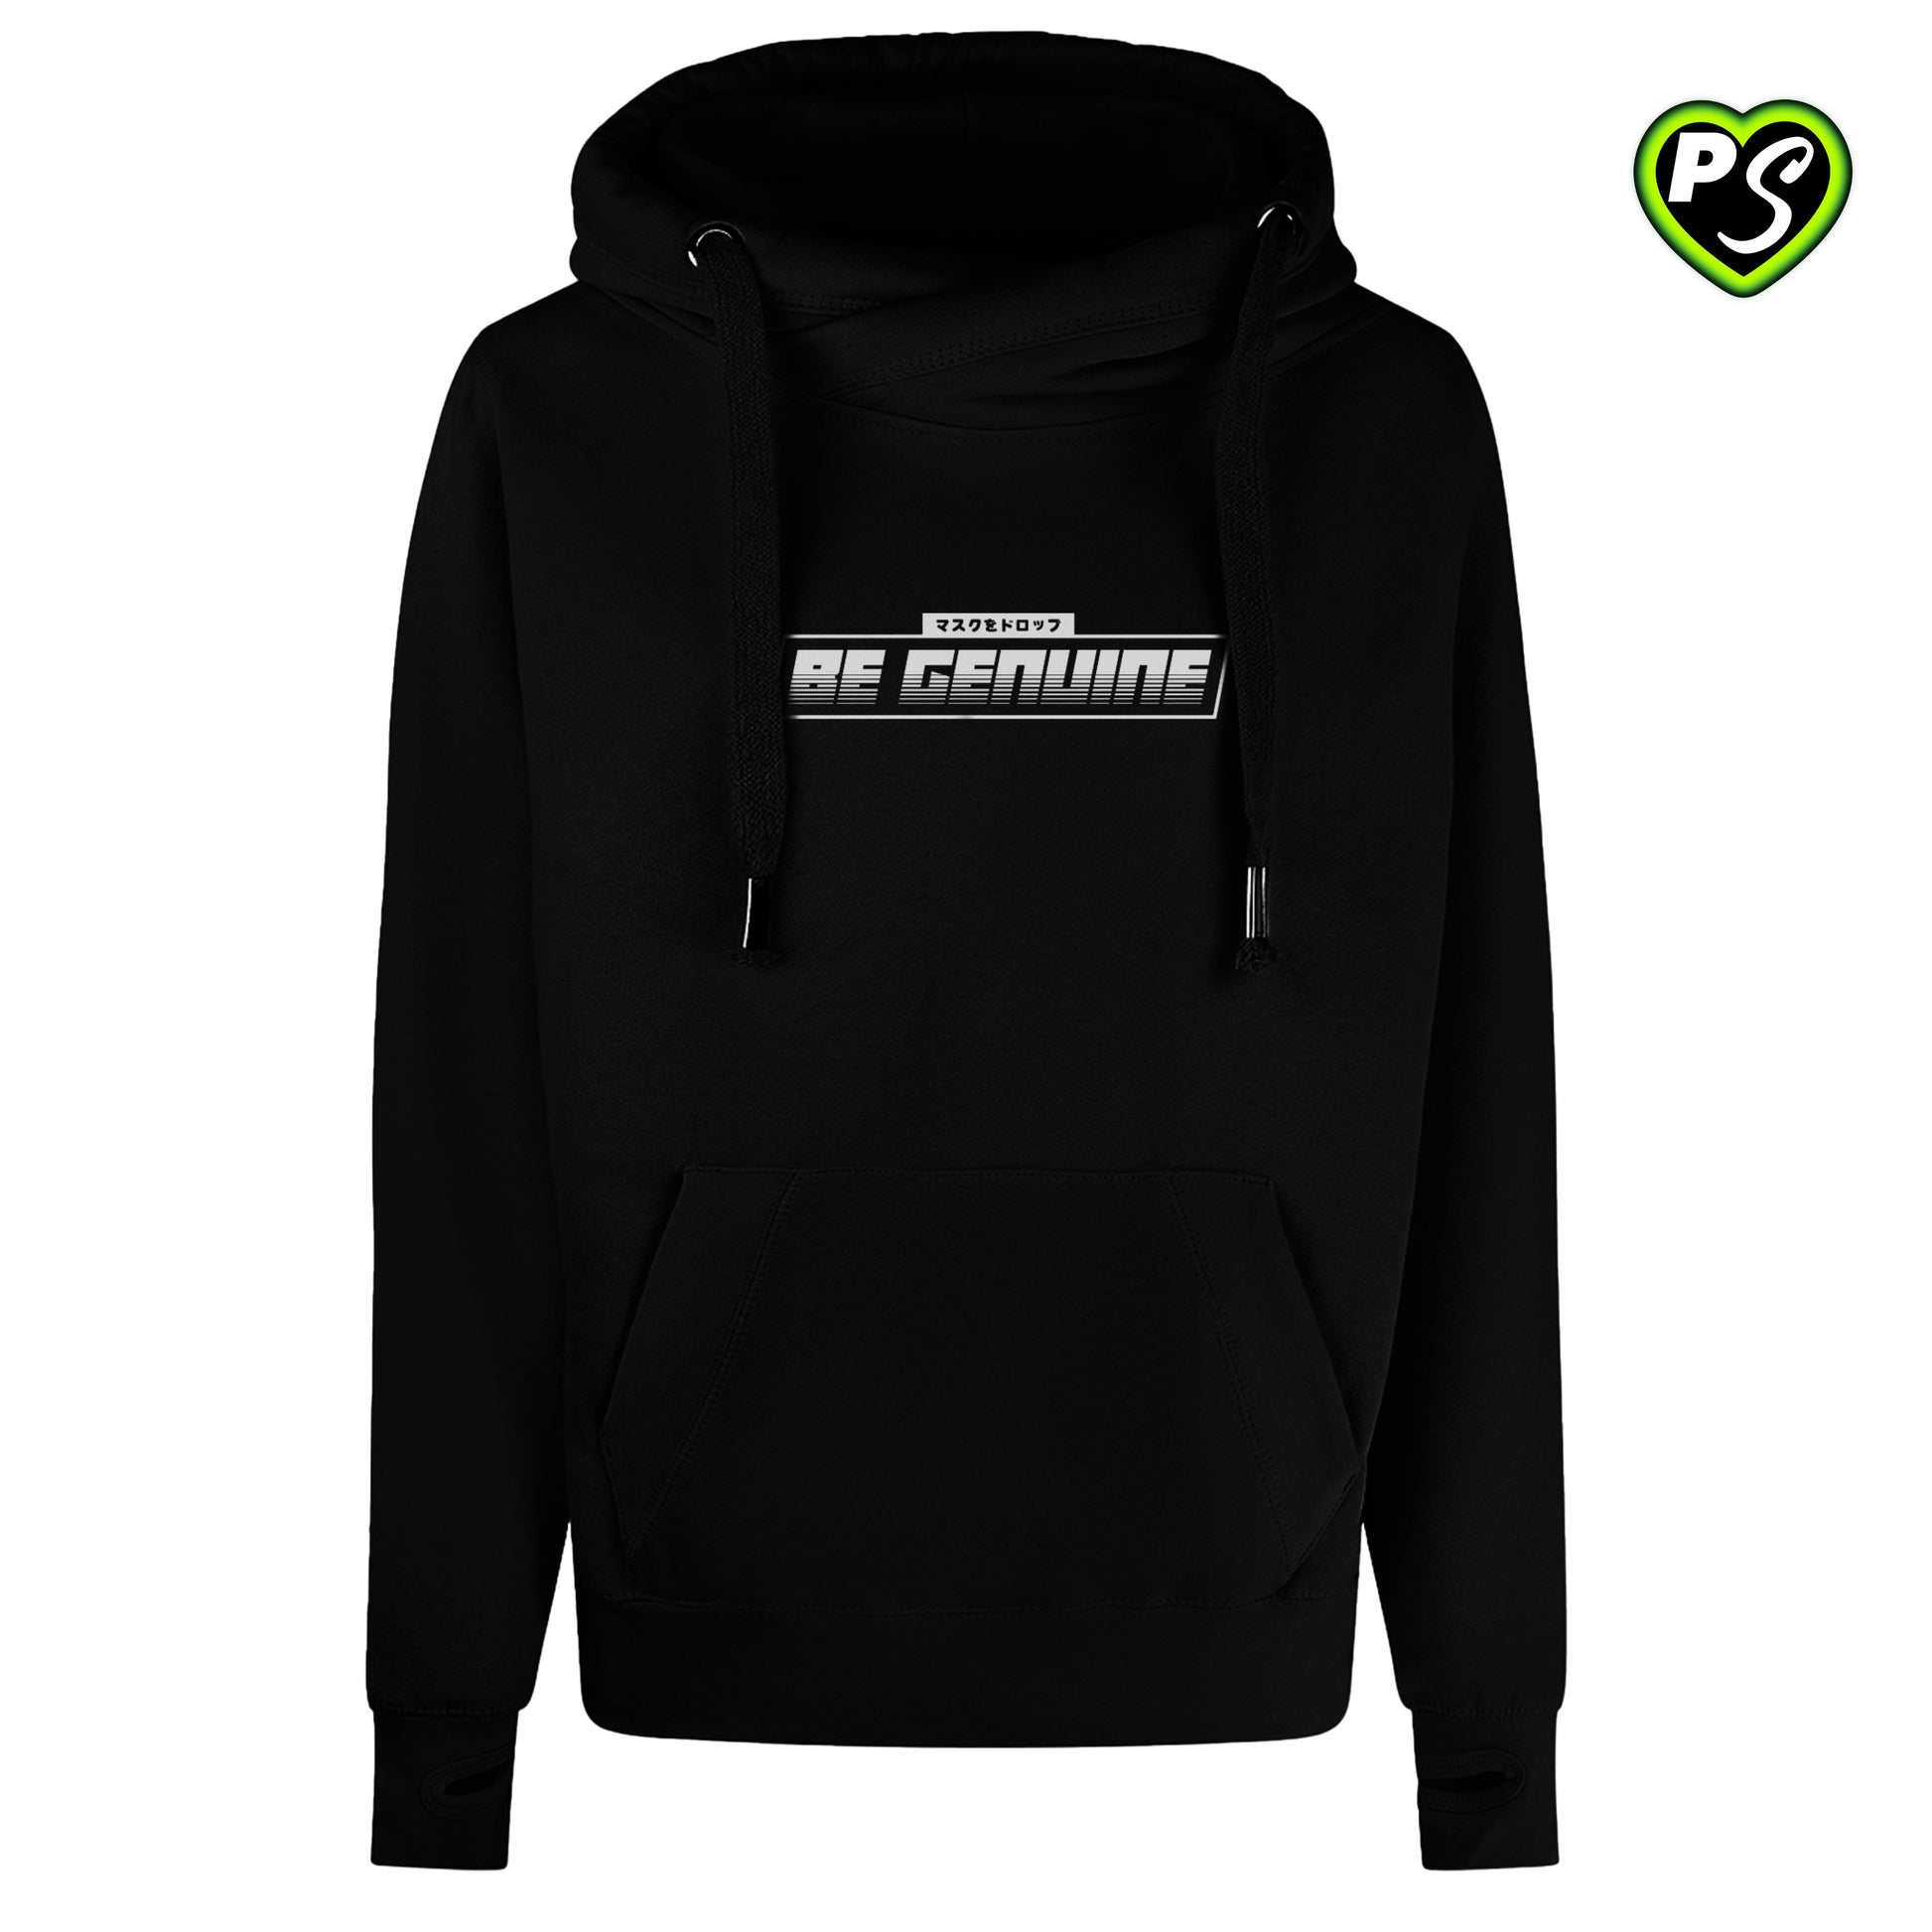 Be Genuine PITSTOP.Social black hoodie design featuring bespoke font PS Heart Logo in corner